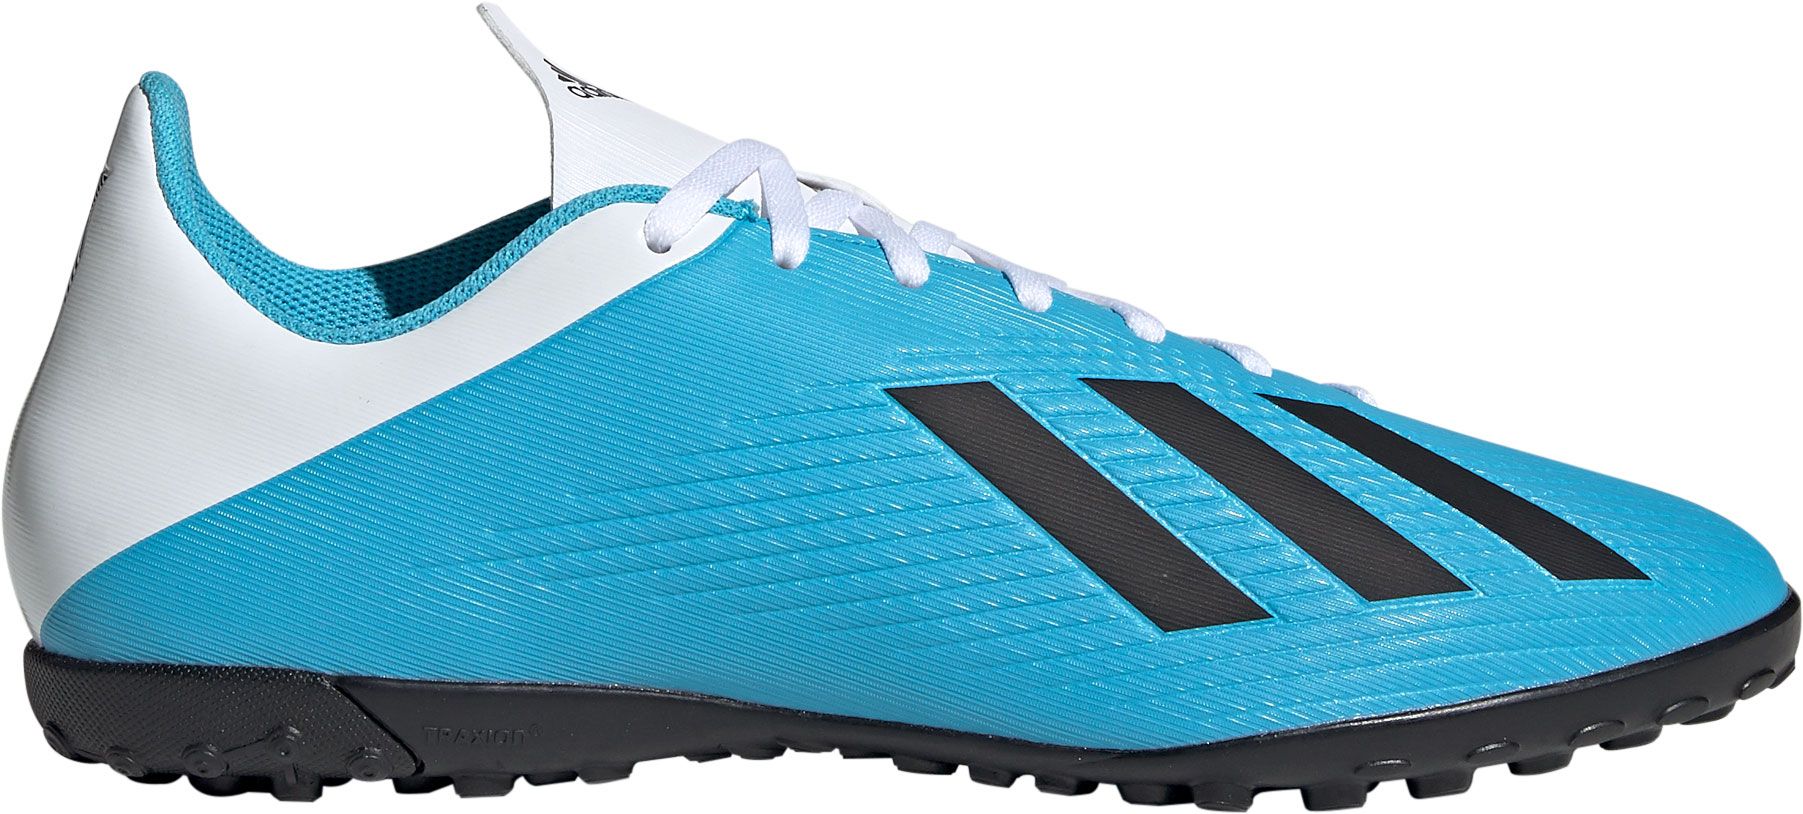 adidas Men's X 19.4 Turf Soccer Cleats 